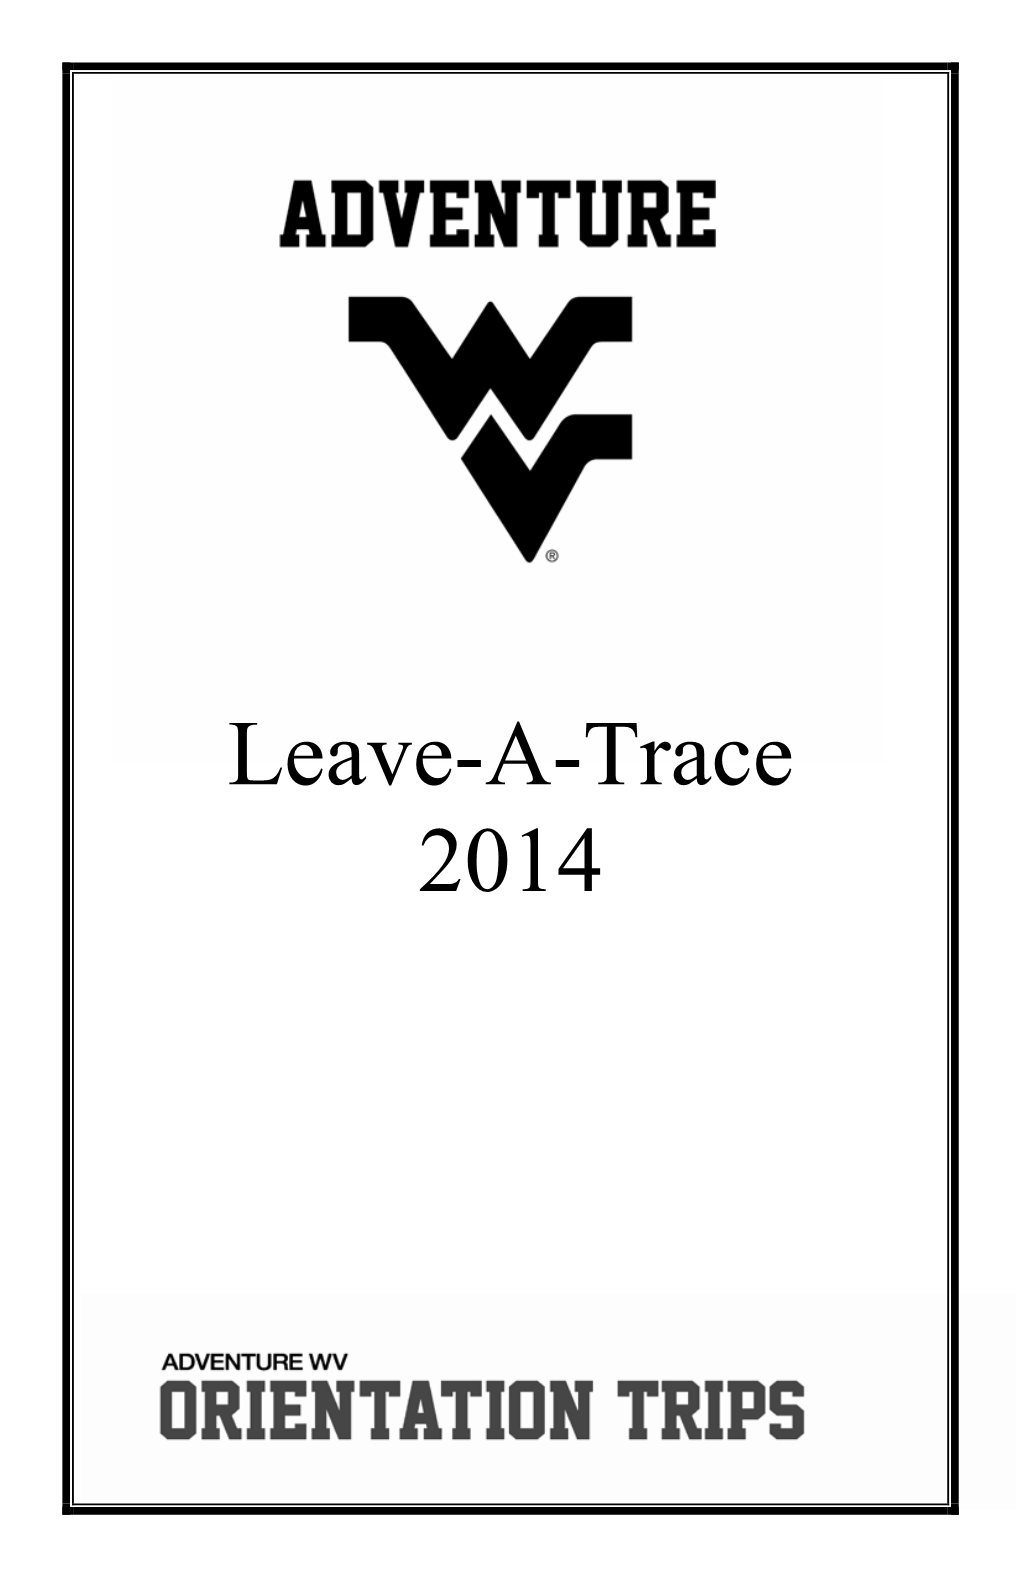 WVU Leave a Trace